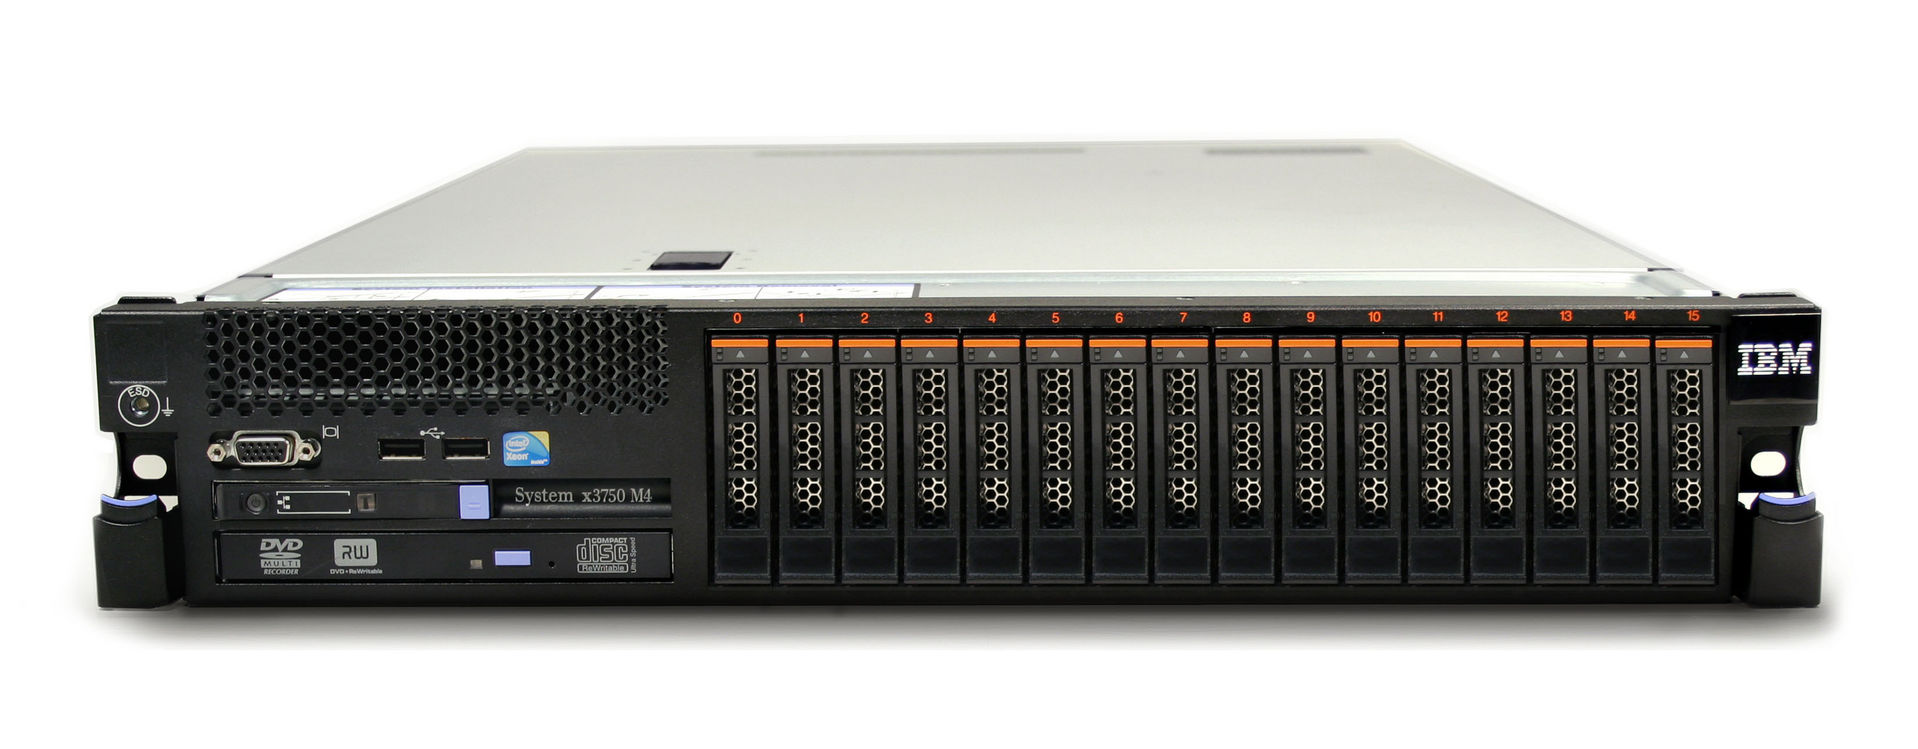 IBM System x3750 M4